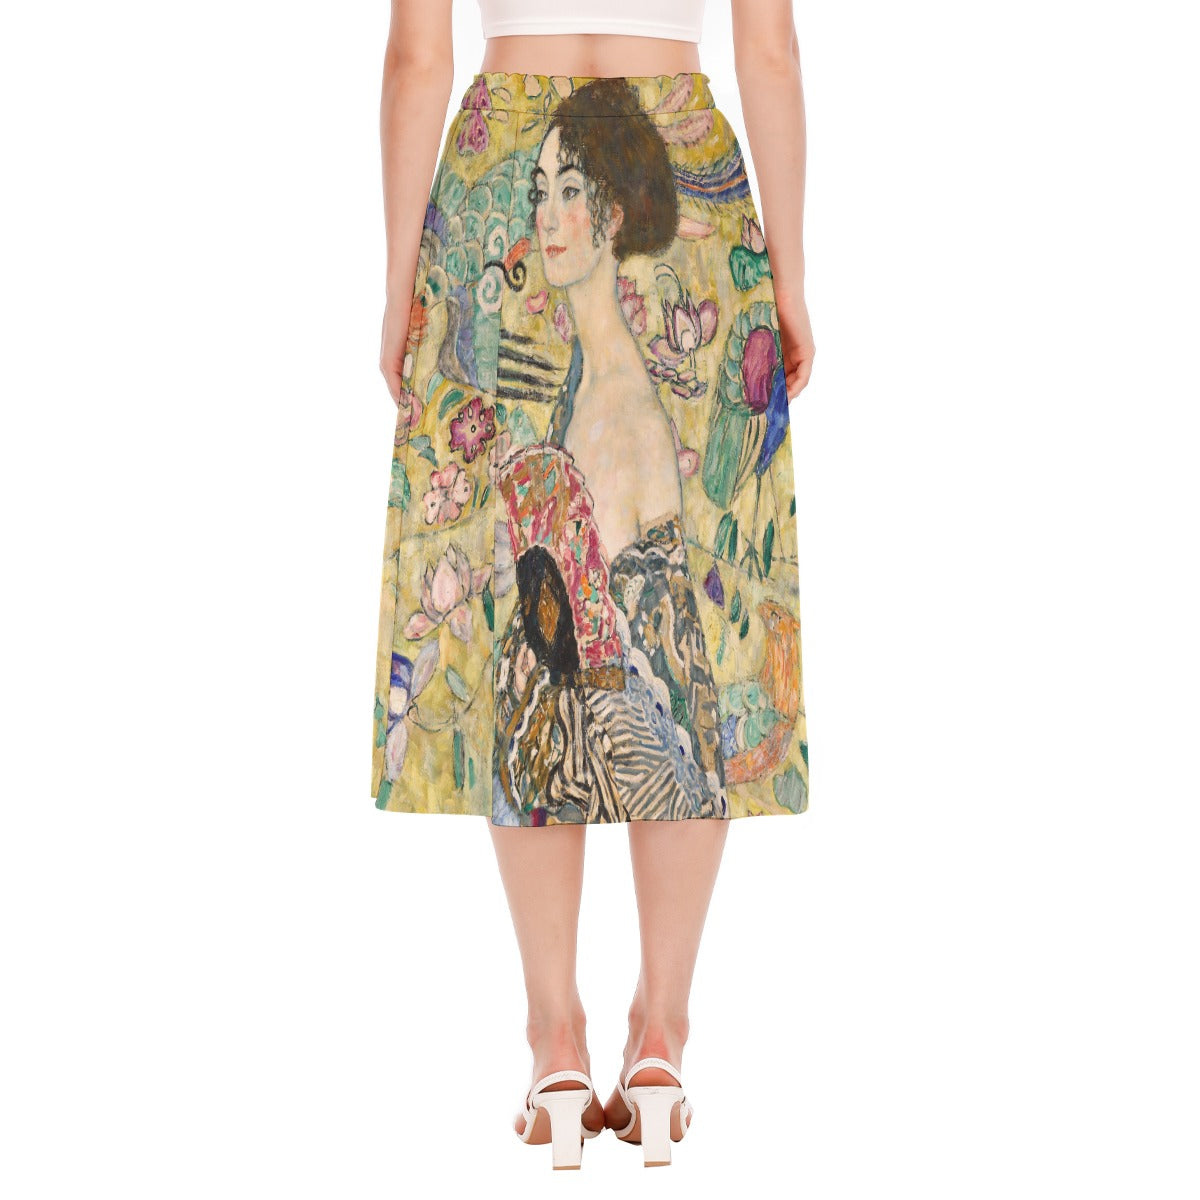 Artistic Chiffon Skirt with Gustav Klimt Print